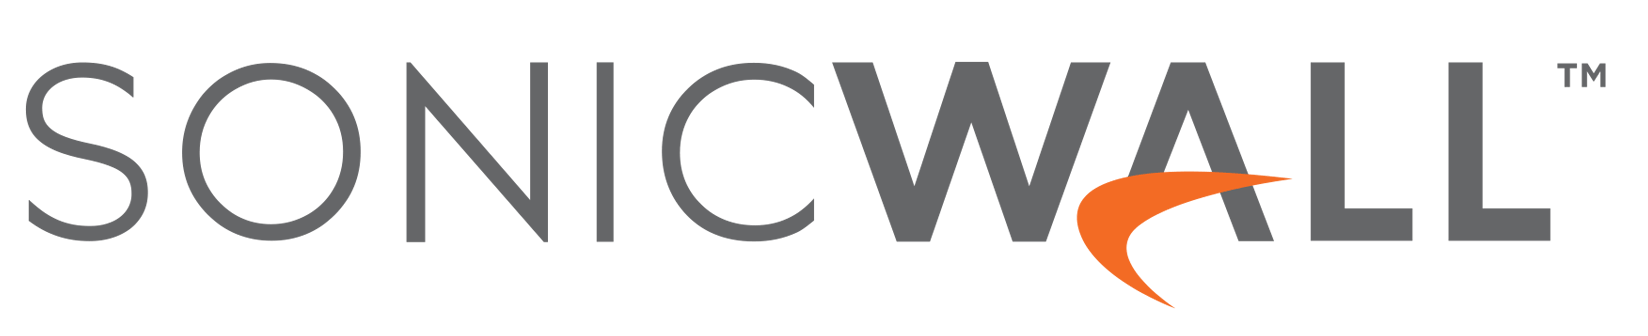 Sonicwall-new-logo